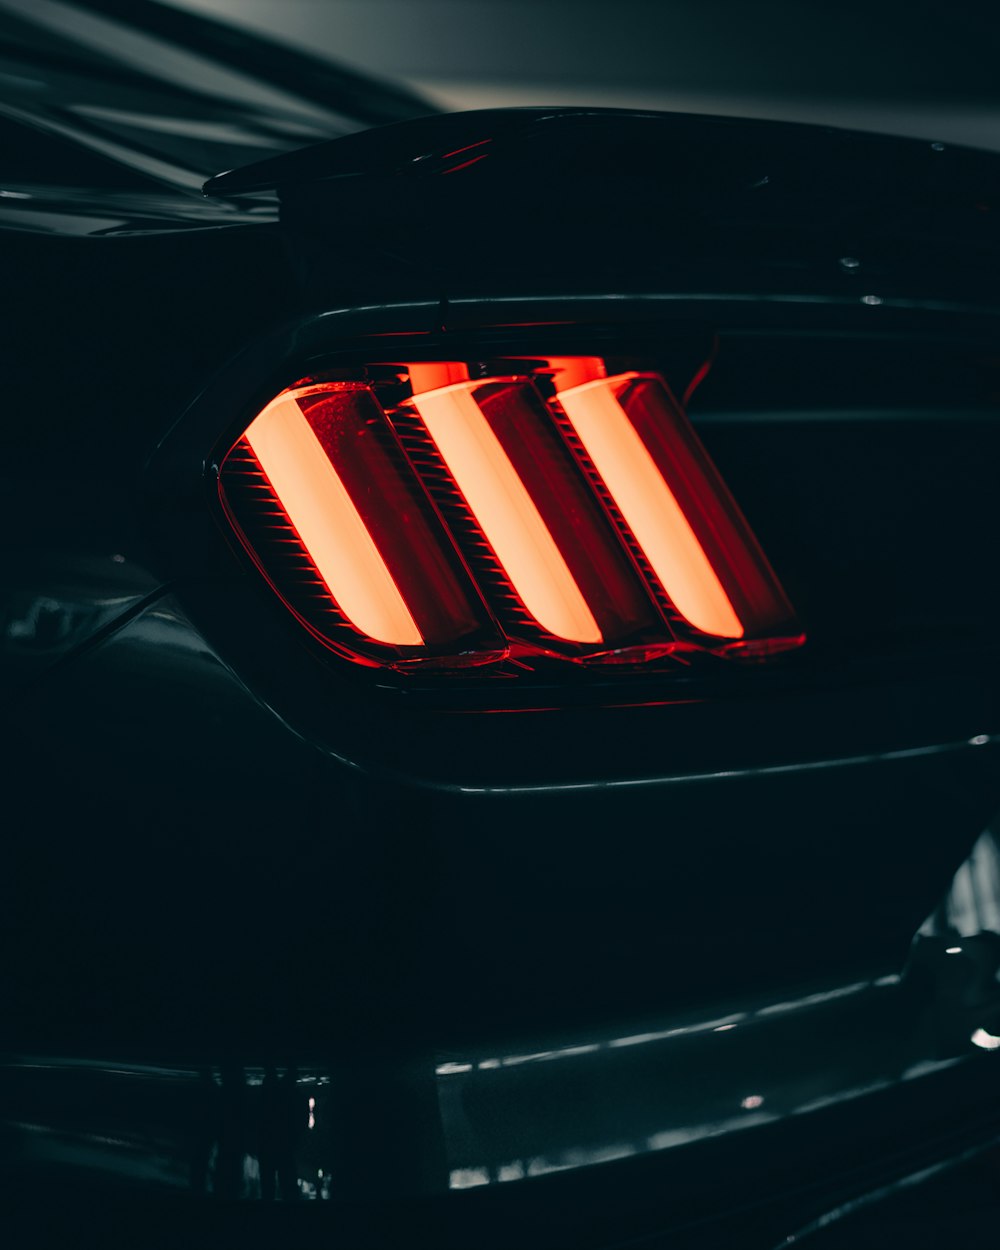 Black and red car tail light photo – Free Light Image on Unsplash